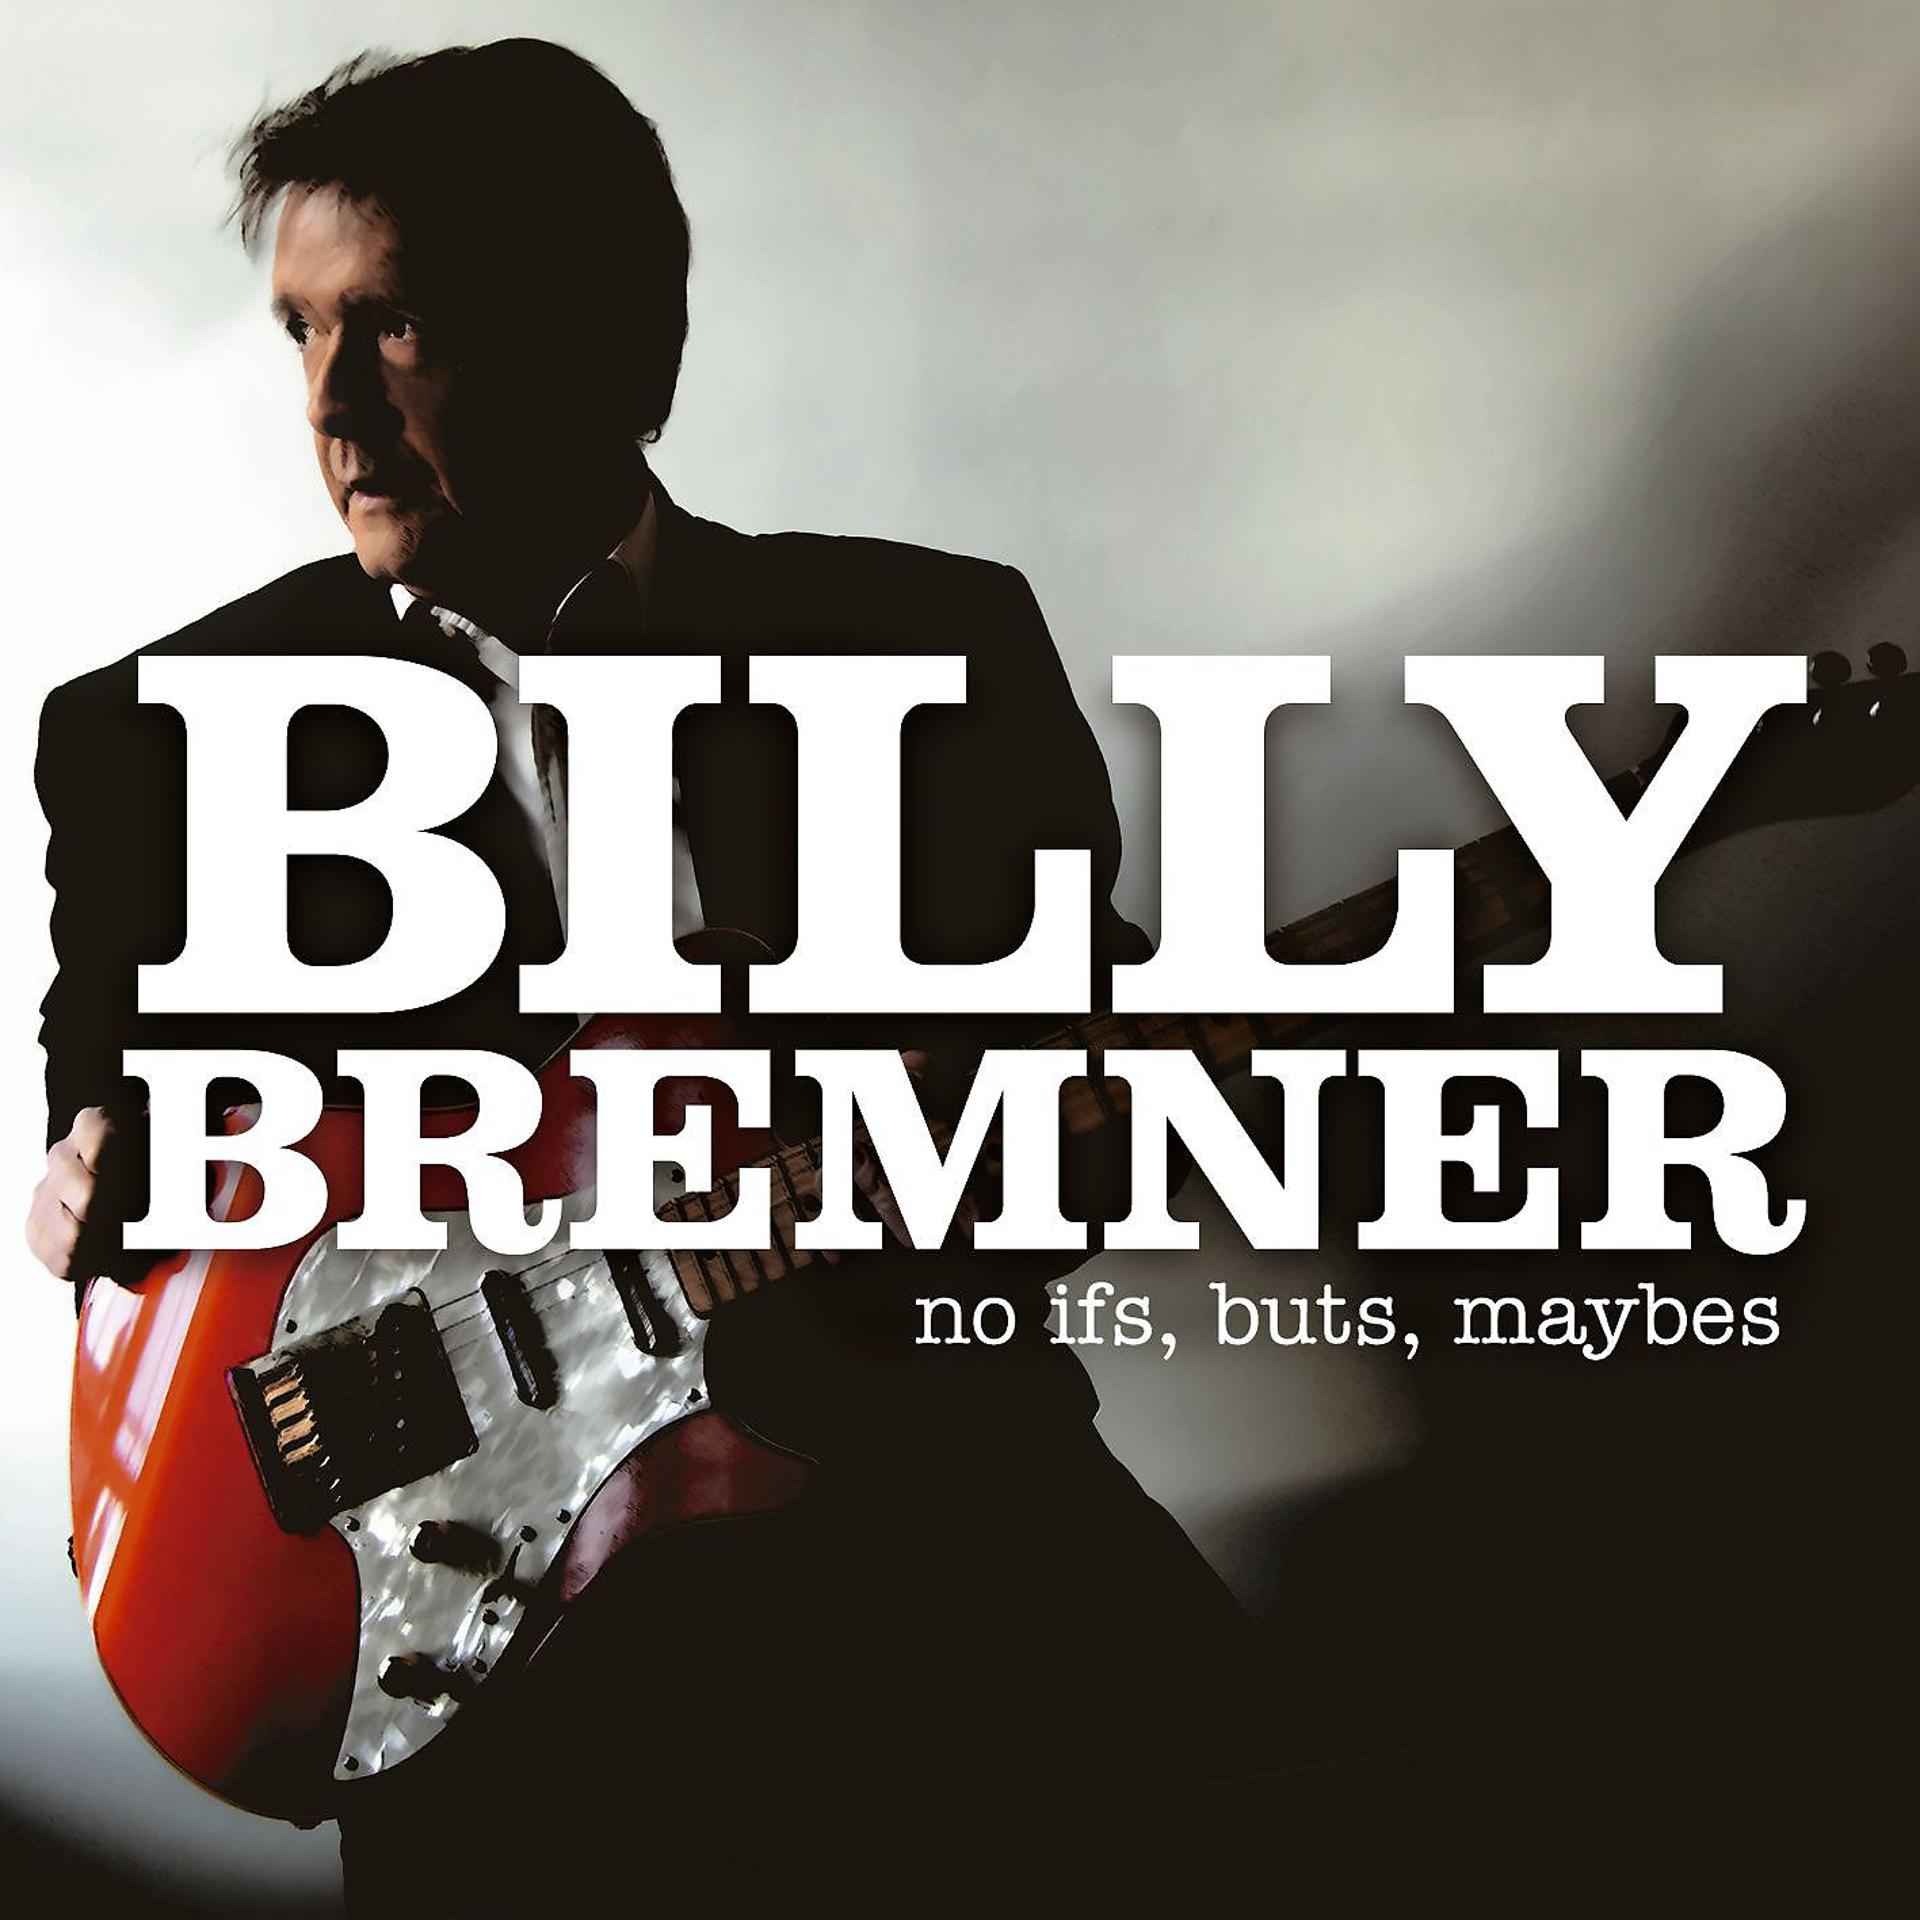 Постер к треку Billy Bremner - The Picture We Painted